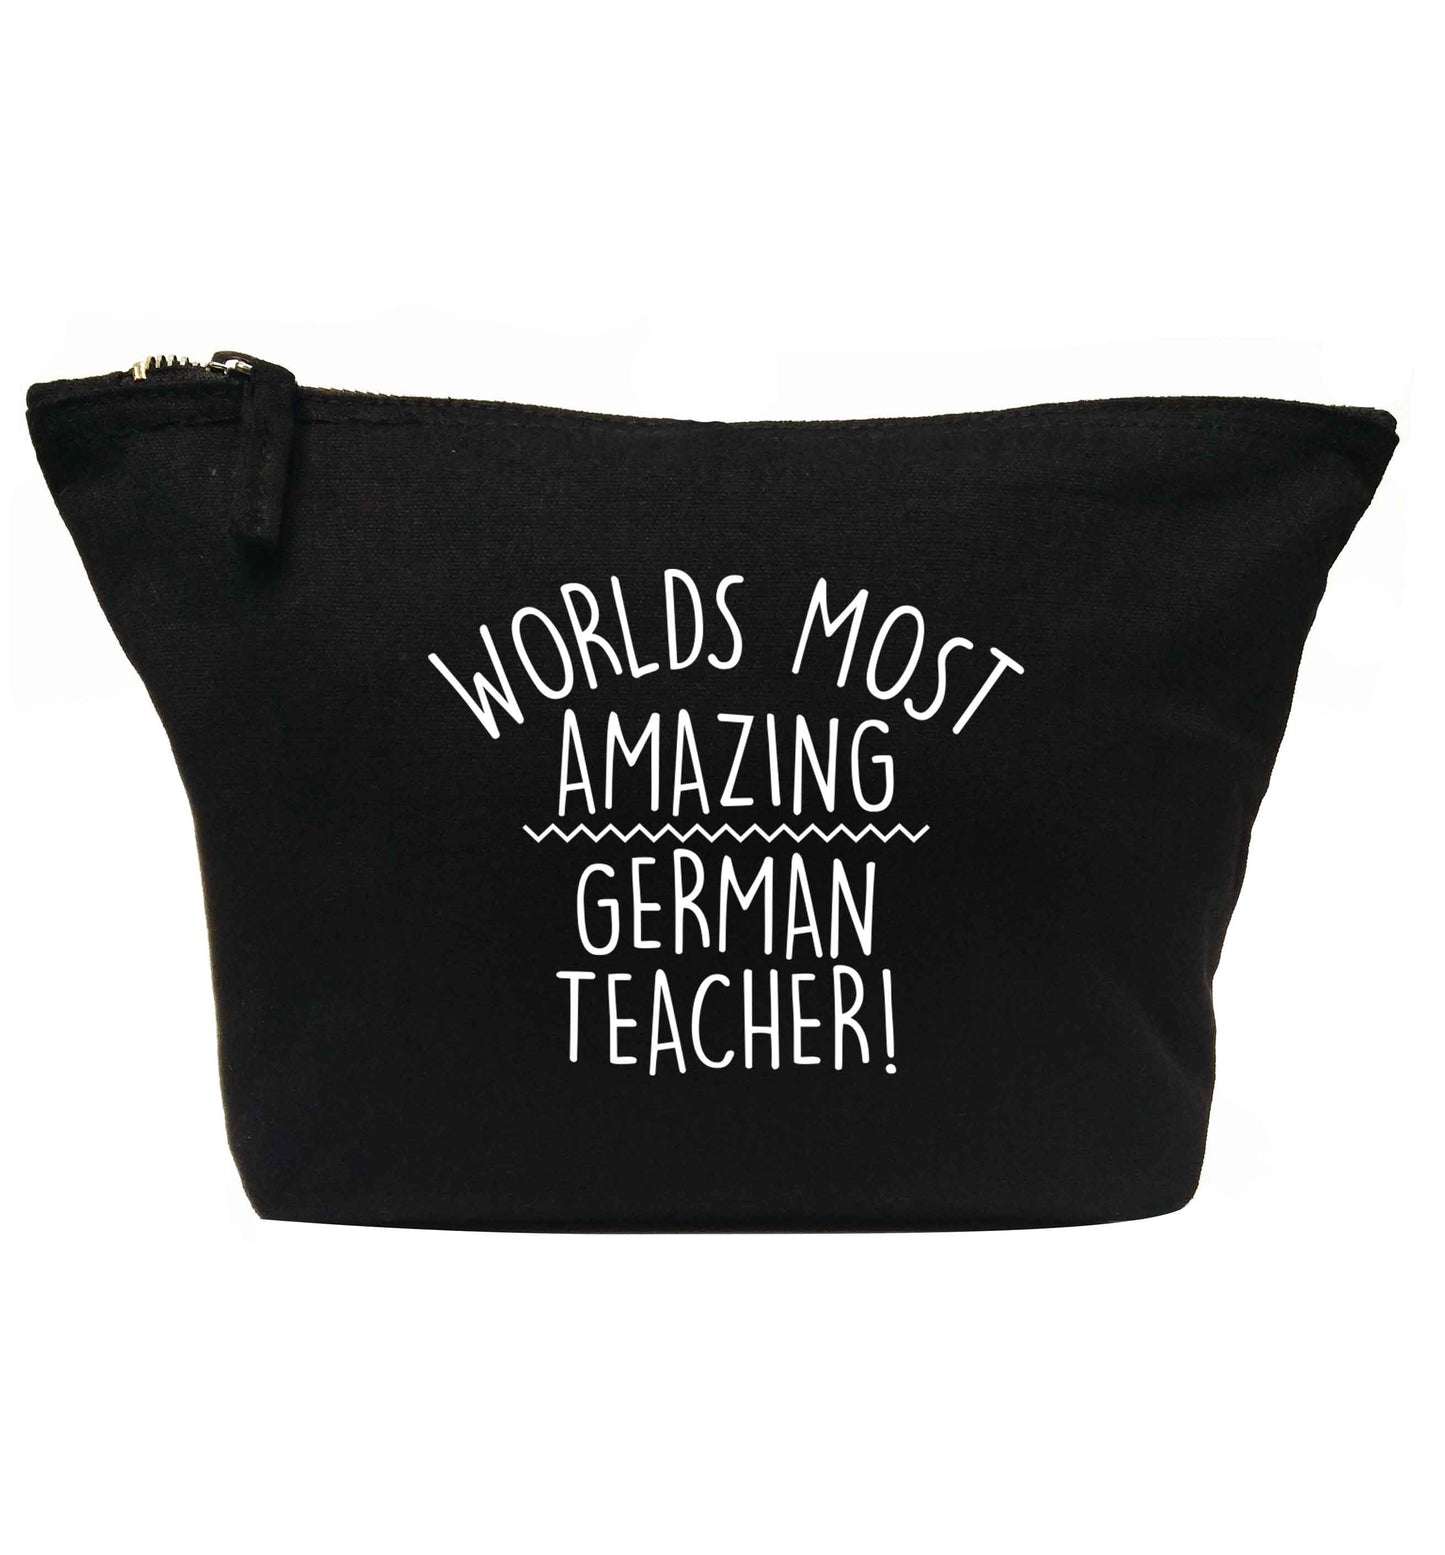 Worlds most amazing German teacher | Makeup / wash bag